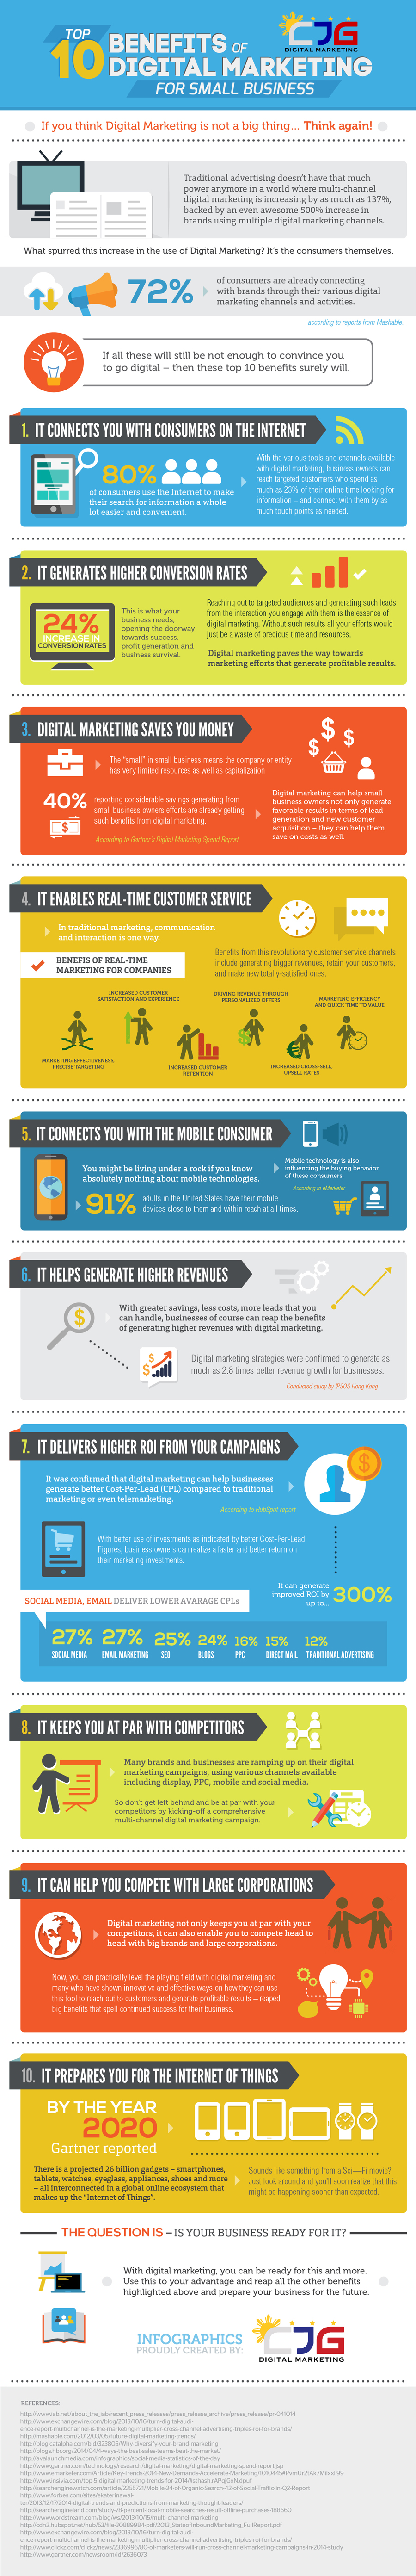 Infographic showcasing 10 benefits of digital marketing